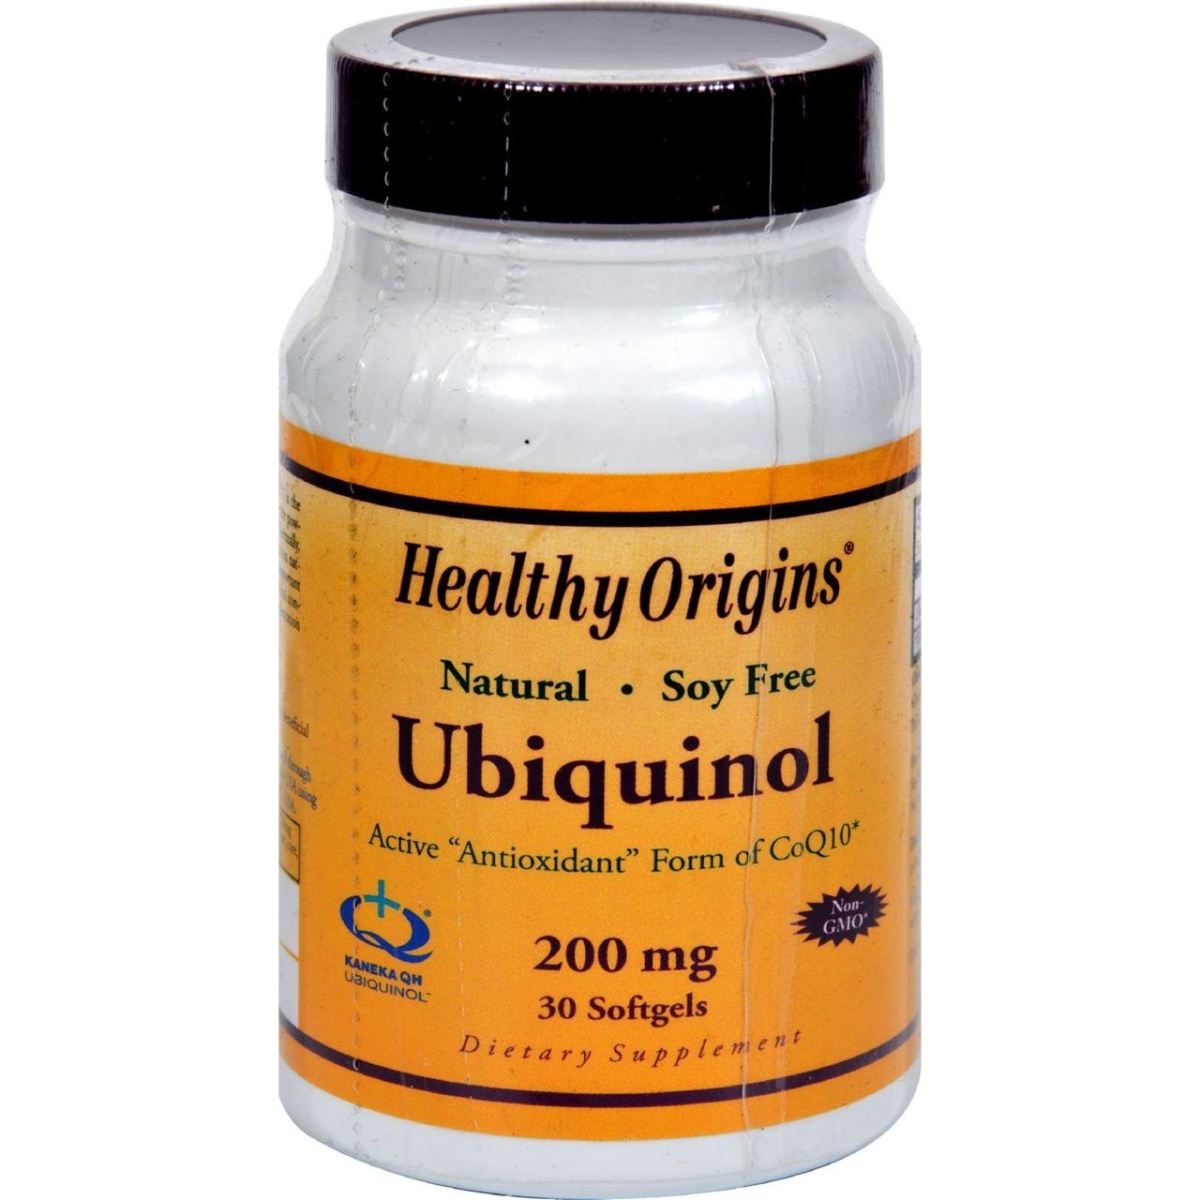 Hg0399006 200 Mg Ubiquinol - 30 Softgels